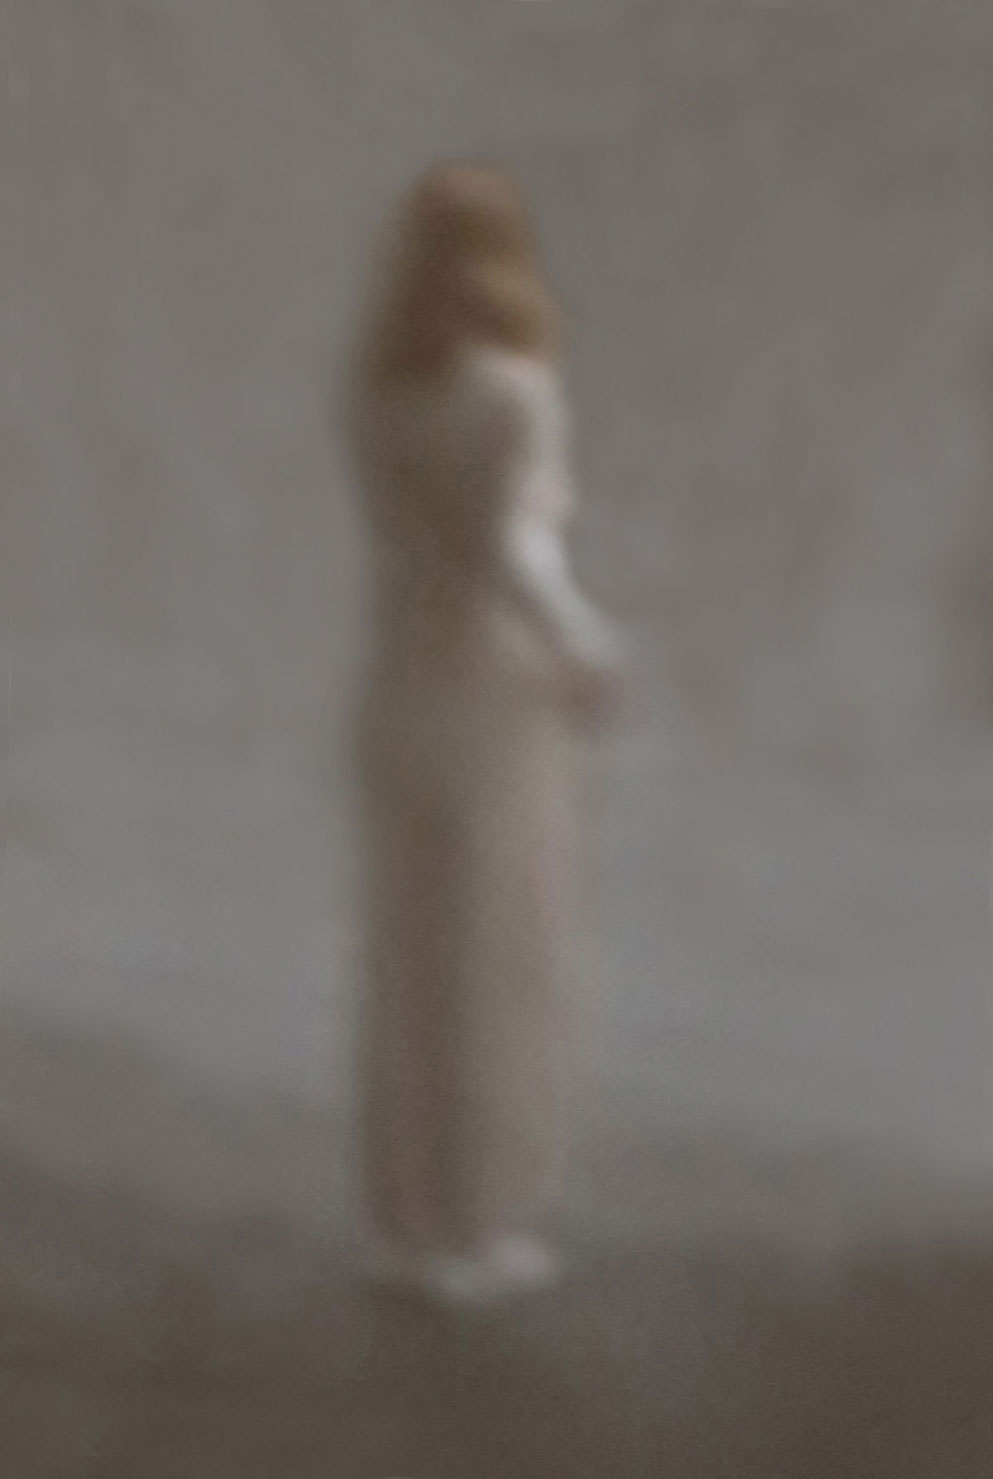 04 „Figur in beige“, 2020, Auckland NZ, Camera Obscura, Pigmentdruck auf Alu-Dibond